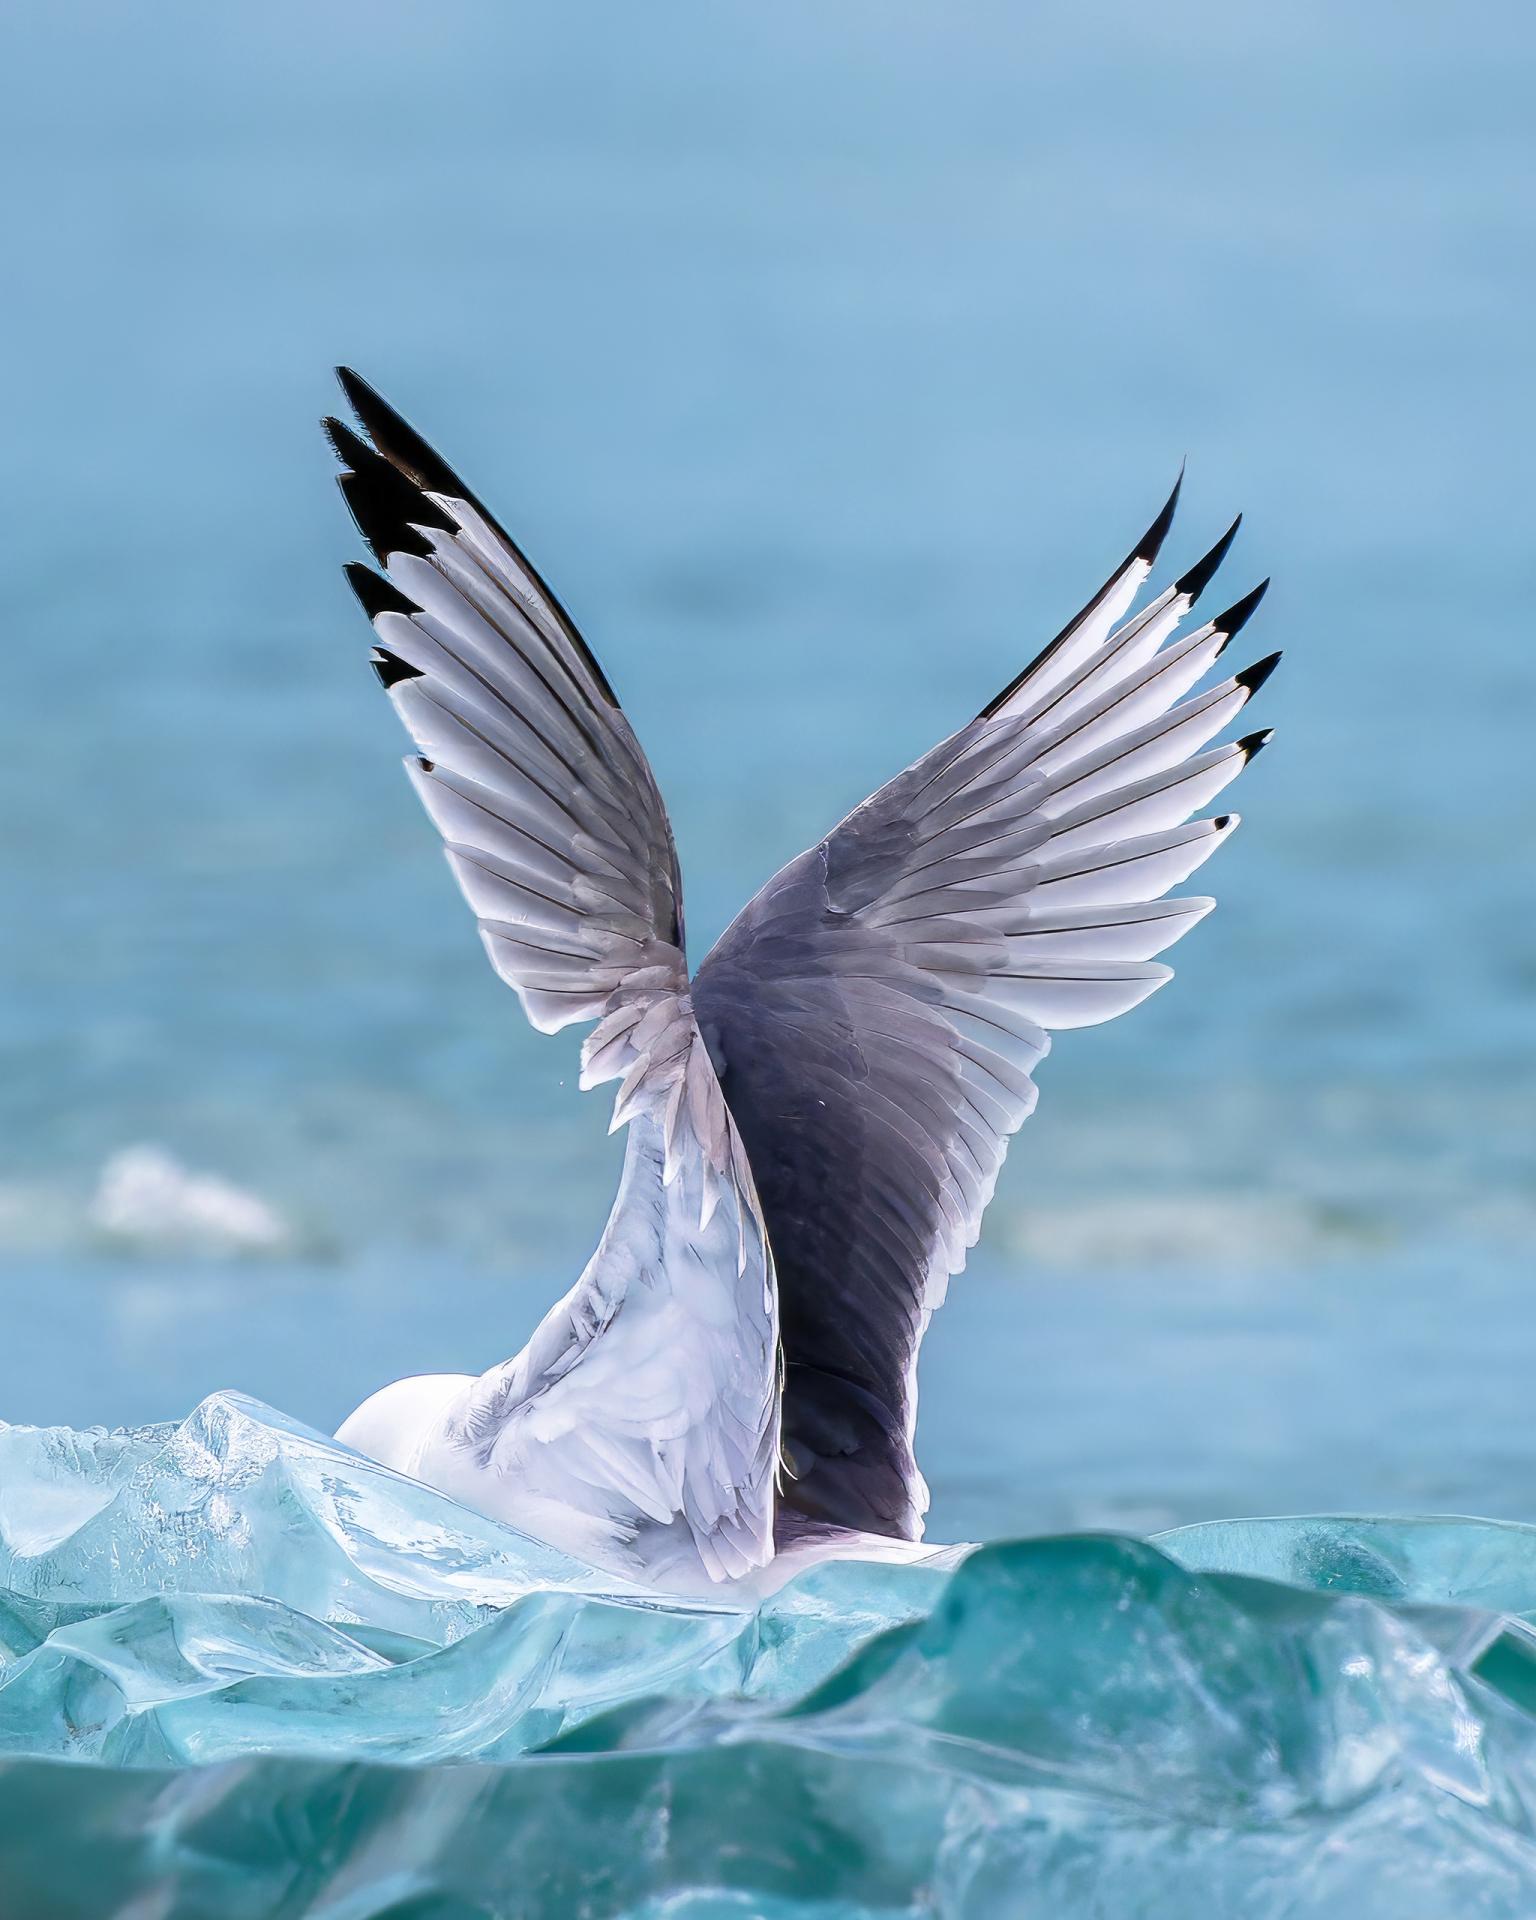 London Photography Awards Winner - Ocean's wings